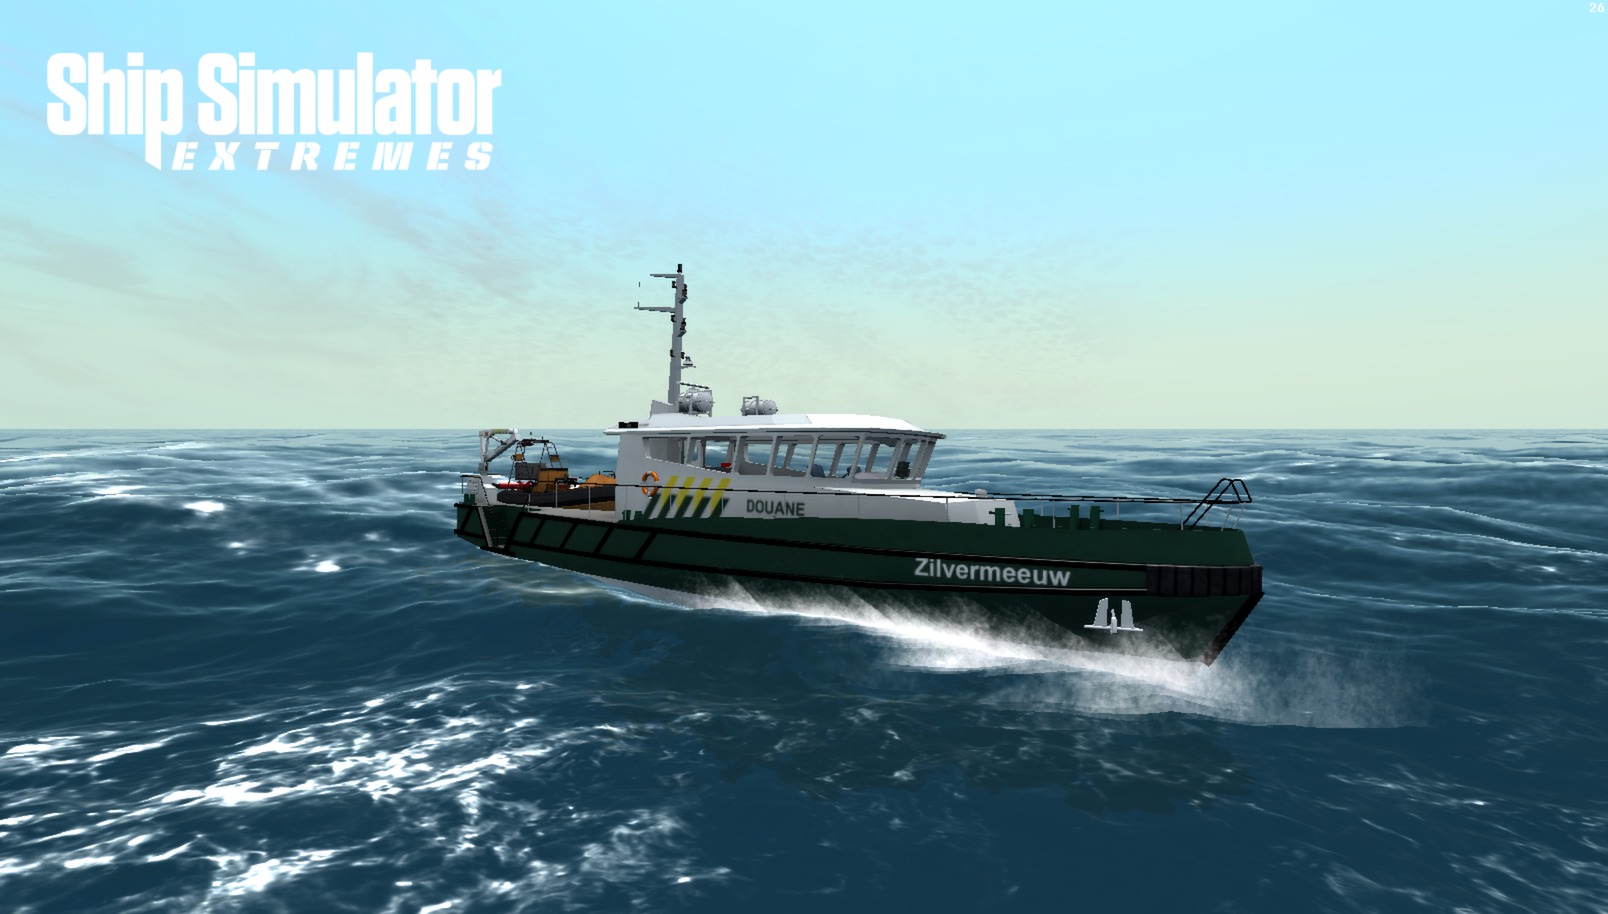 Ship Simulator Extremes Featured Screenshot #1